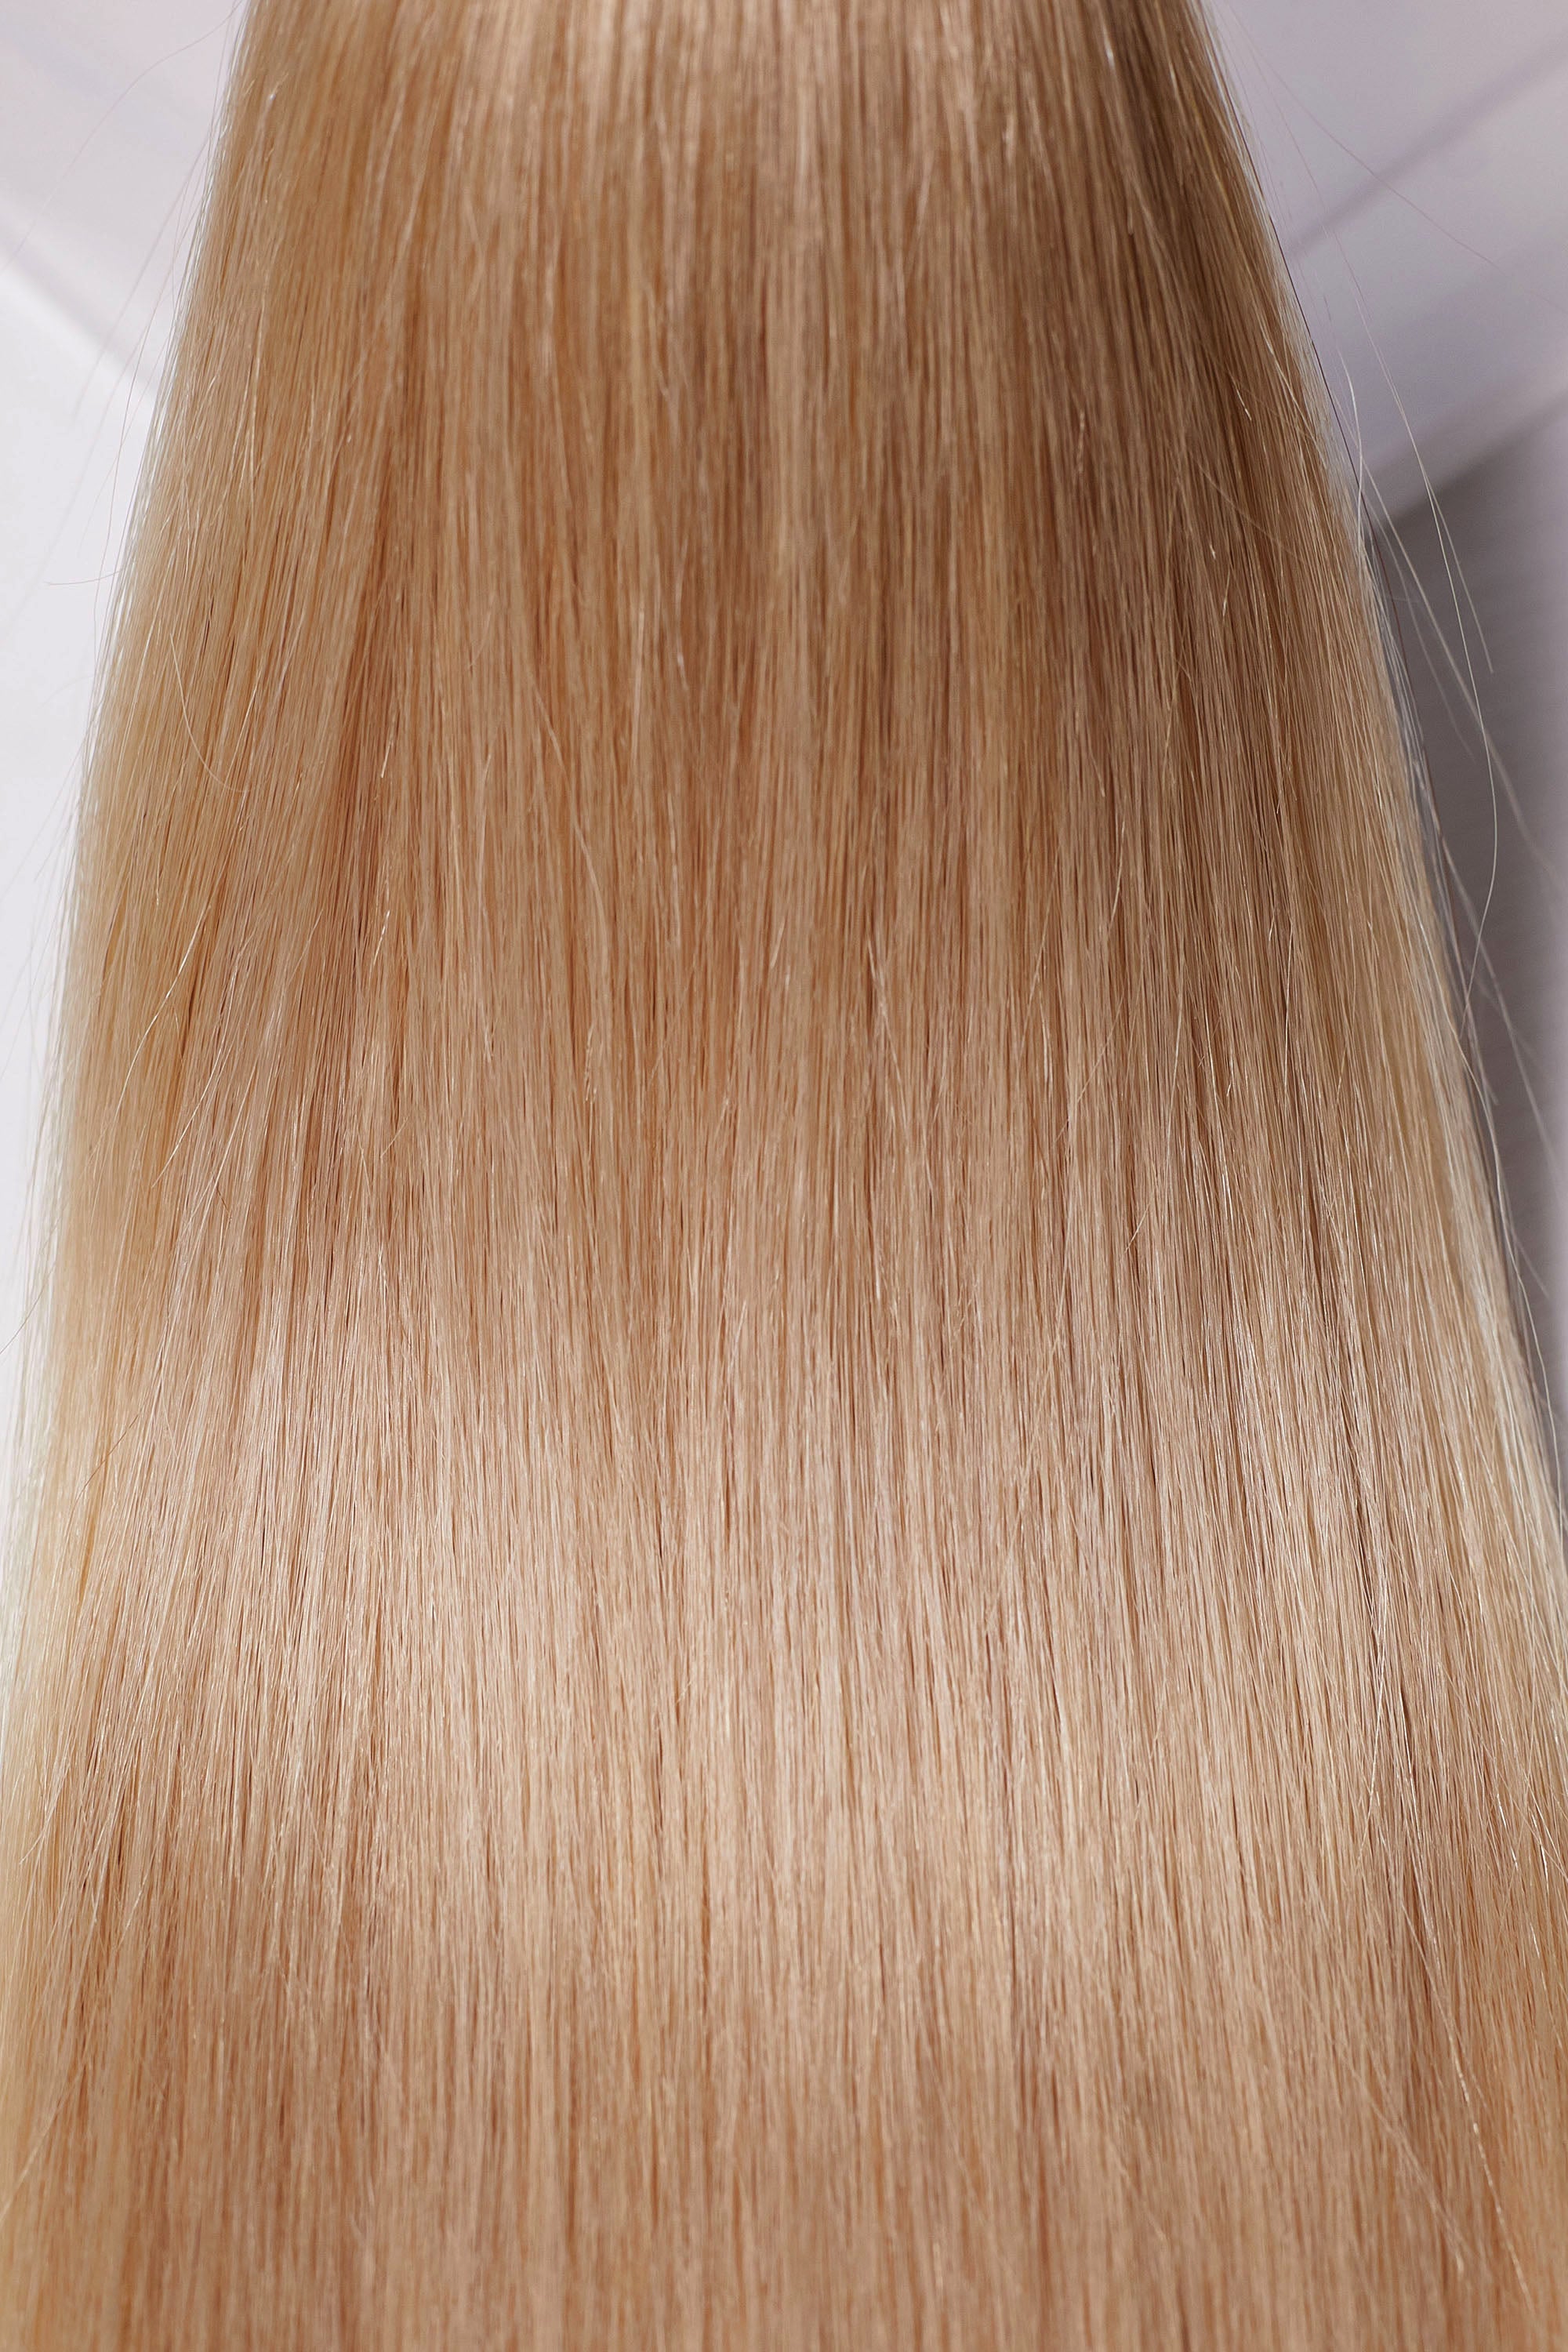 Behair professional Bulk hair "Premium" 26" (65cm) Natural Straight Light Gold Sand #16 - 25g hair extensions